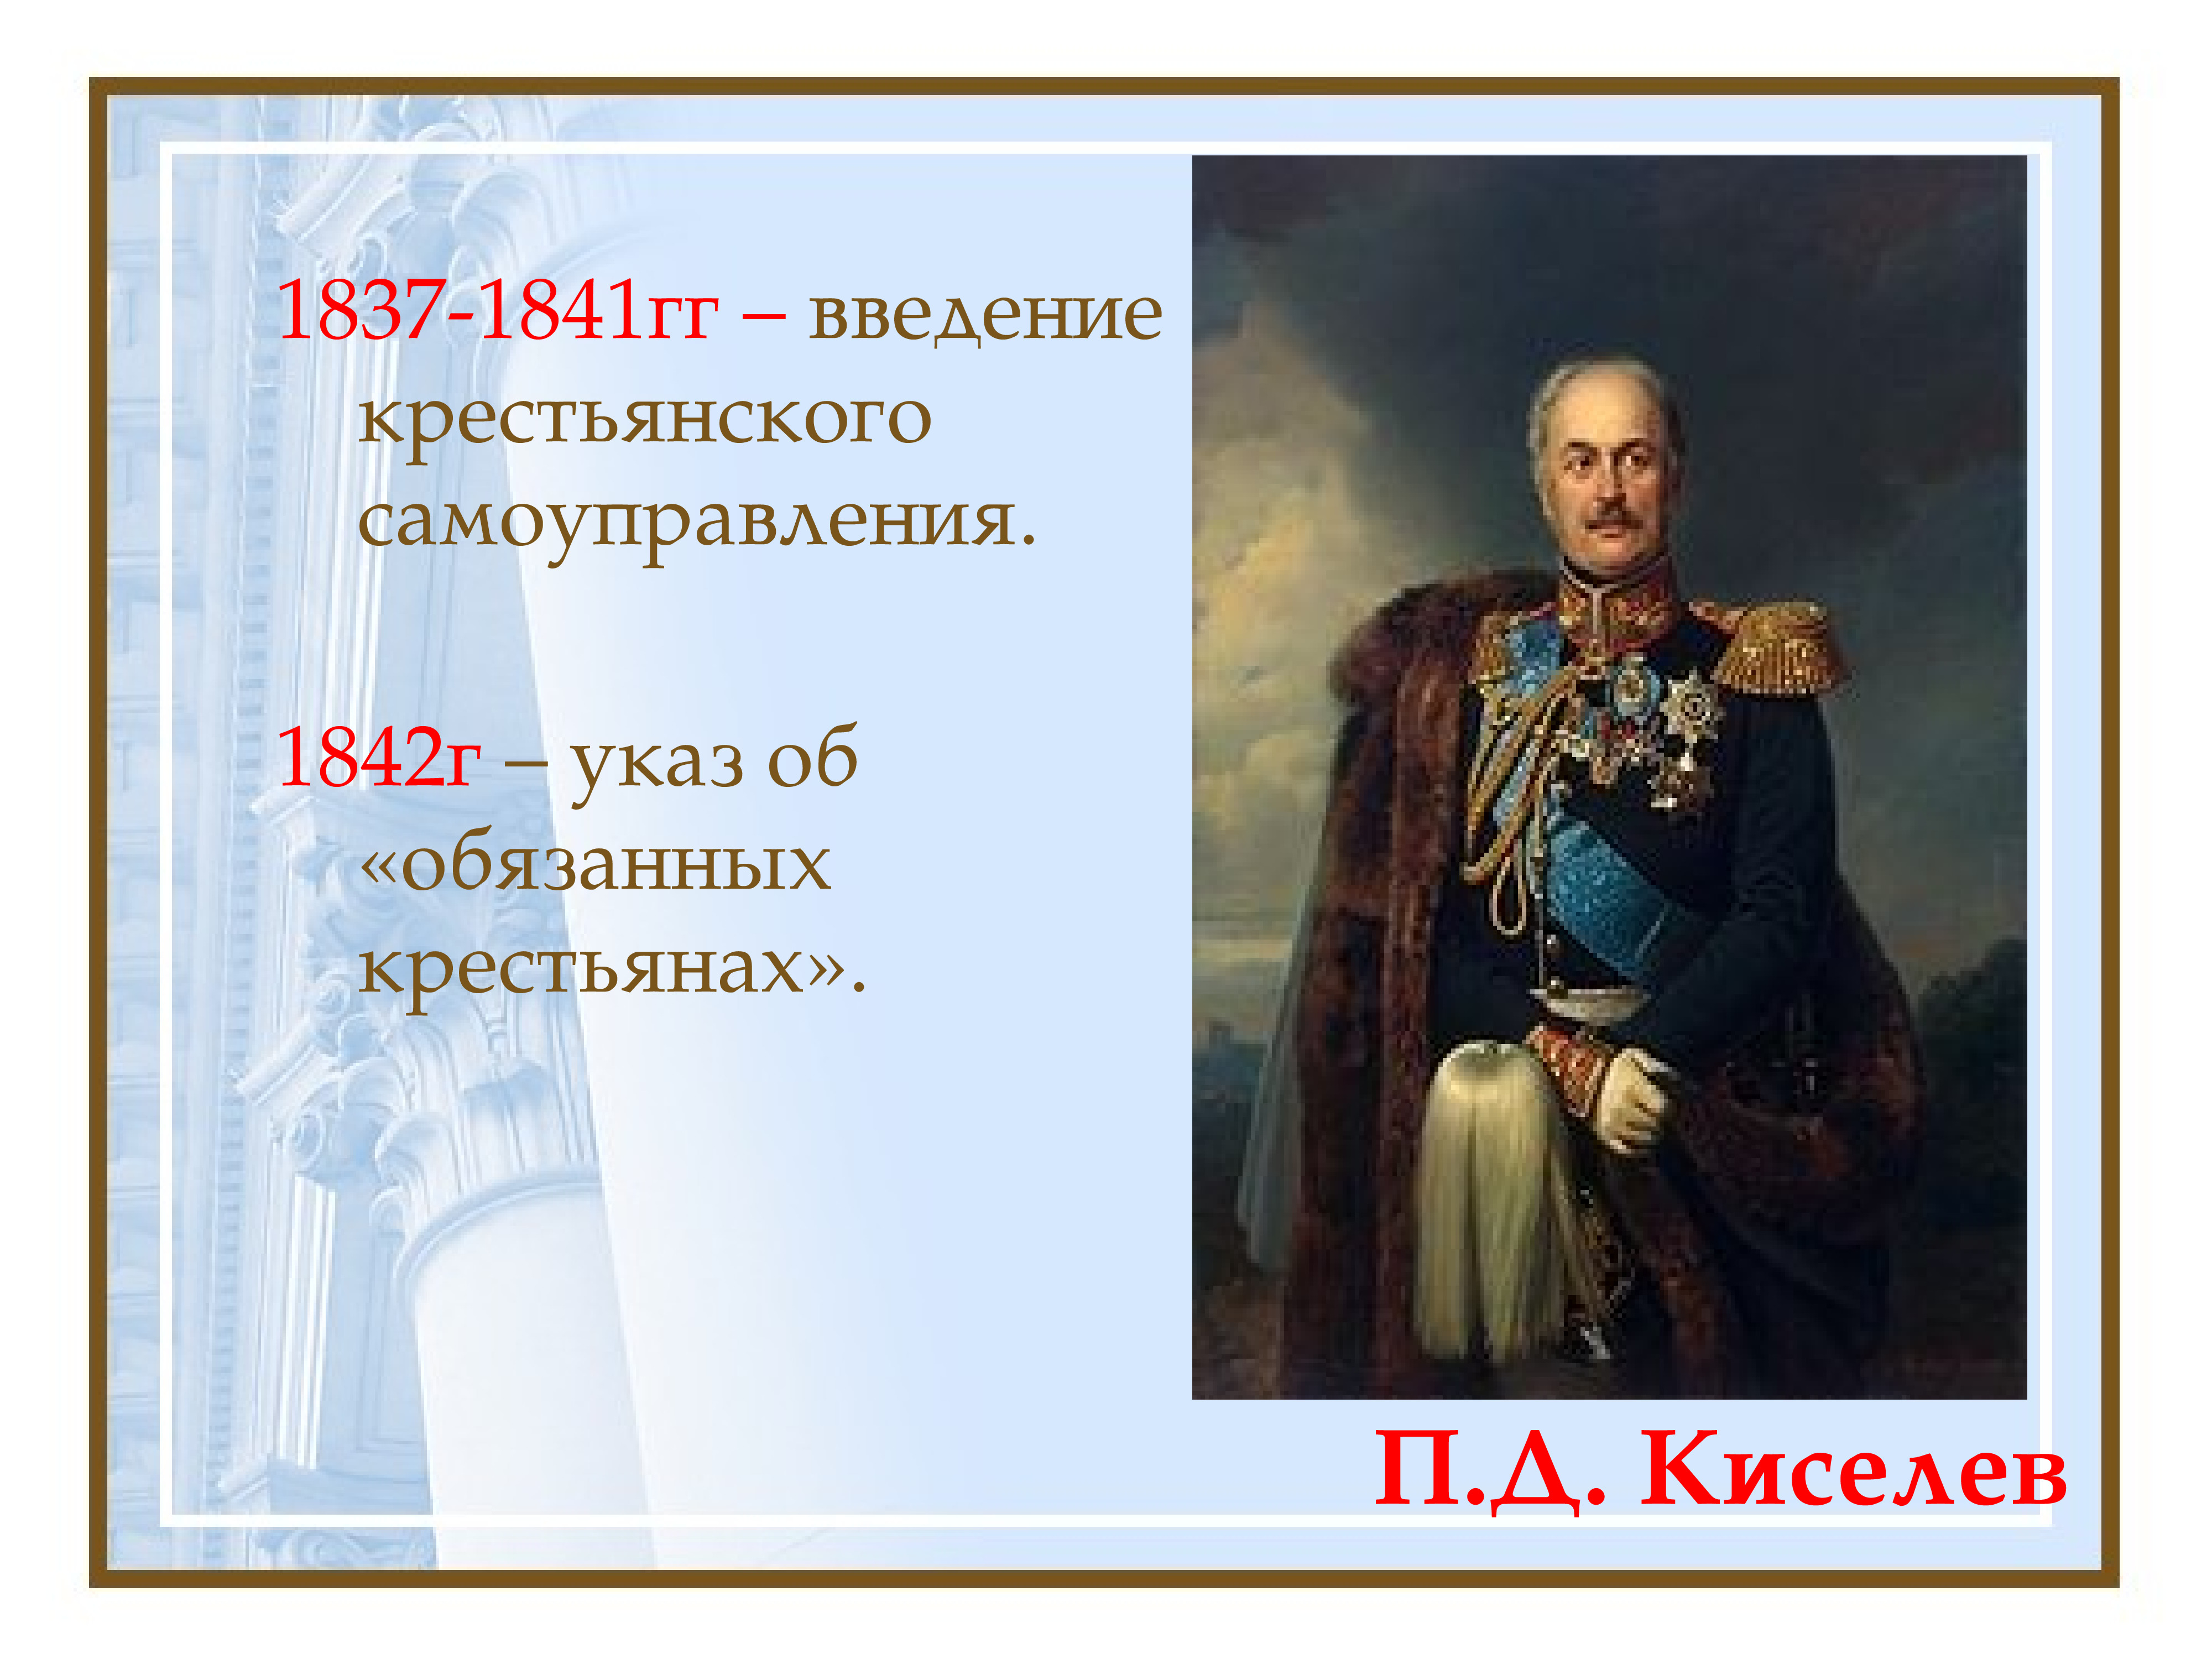 1842 указ об обязанных. Реформа п.д. Киселева (1837–1841).